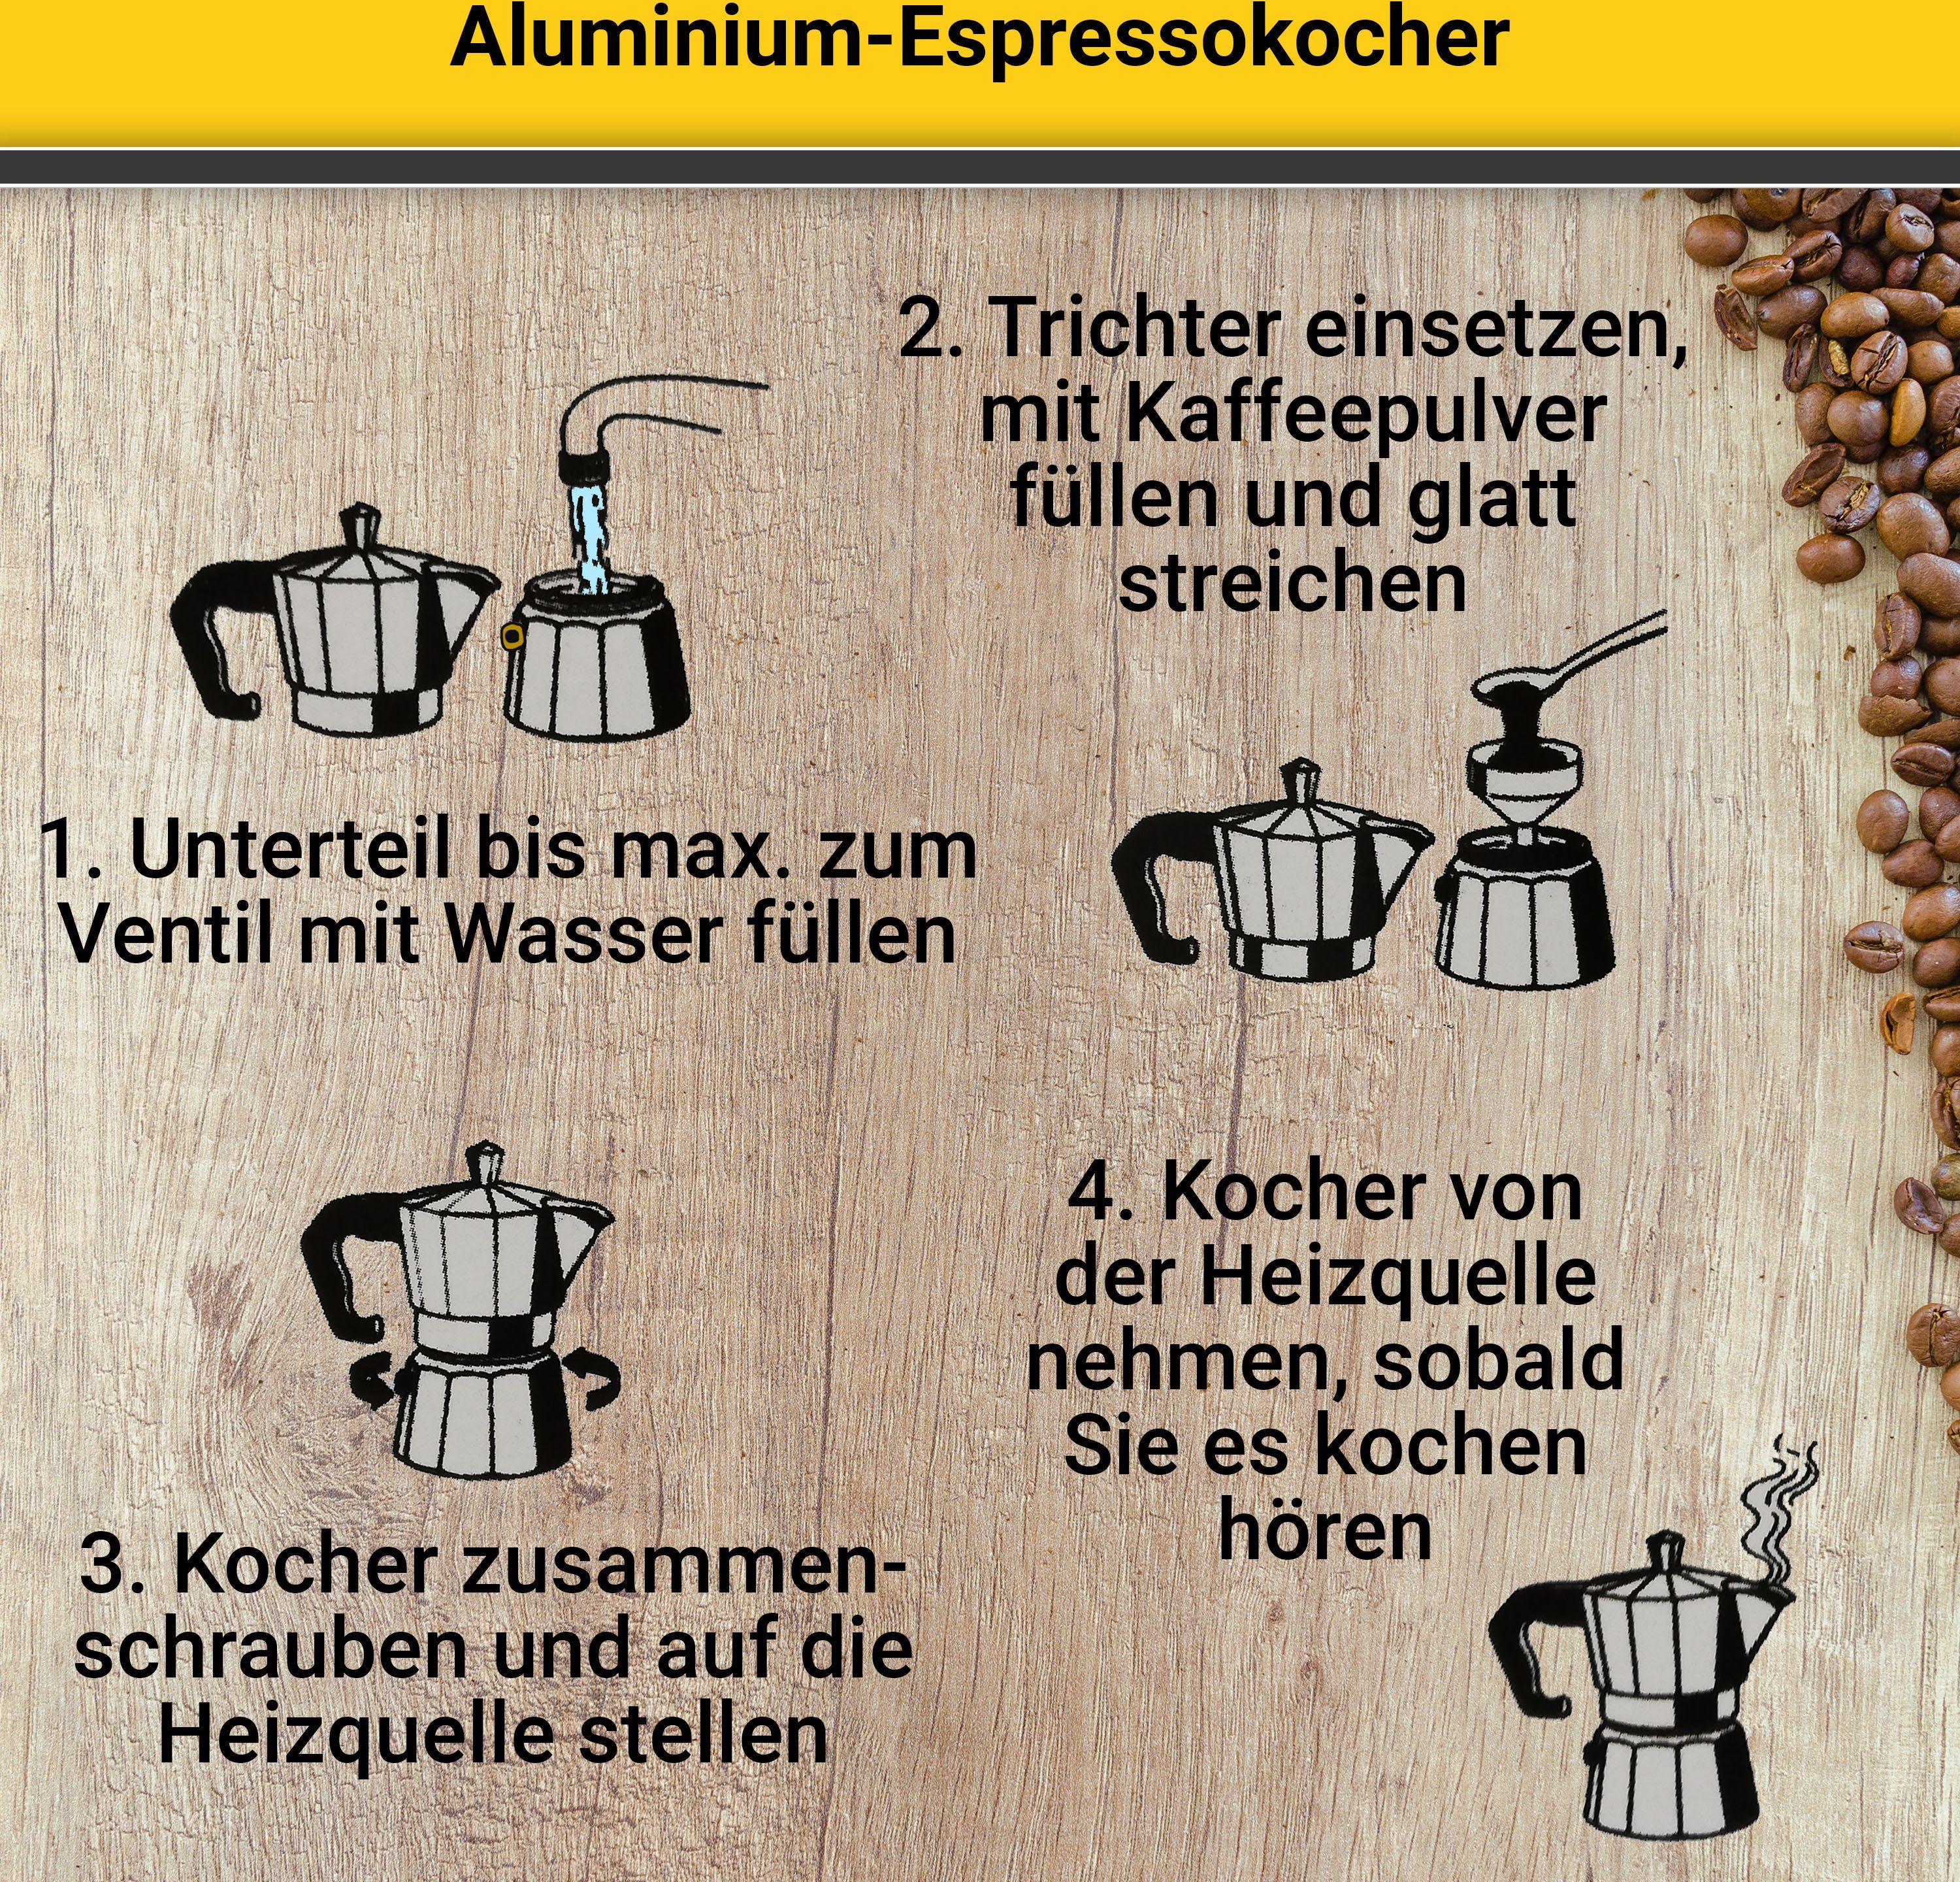 Krüger Tassen für Aluminium, Druckbrüh-Kaffeemaschine 6 502,